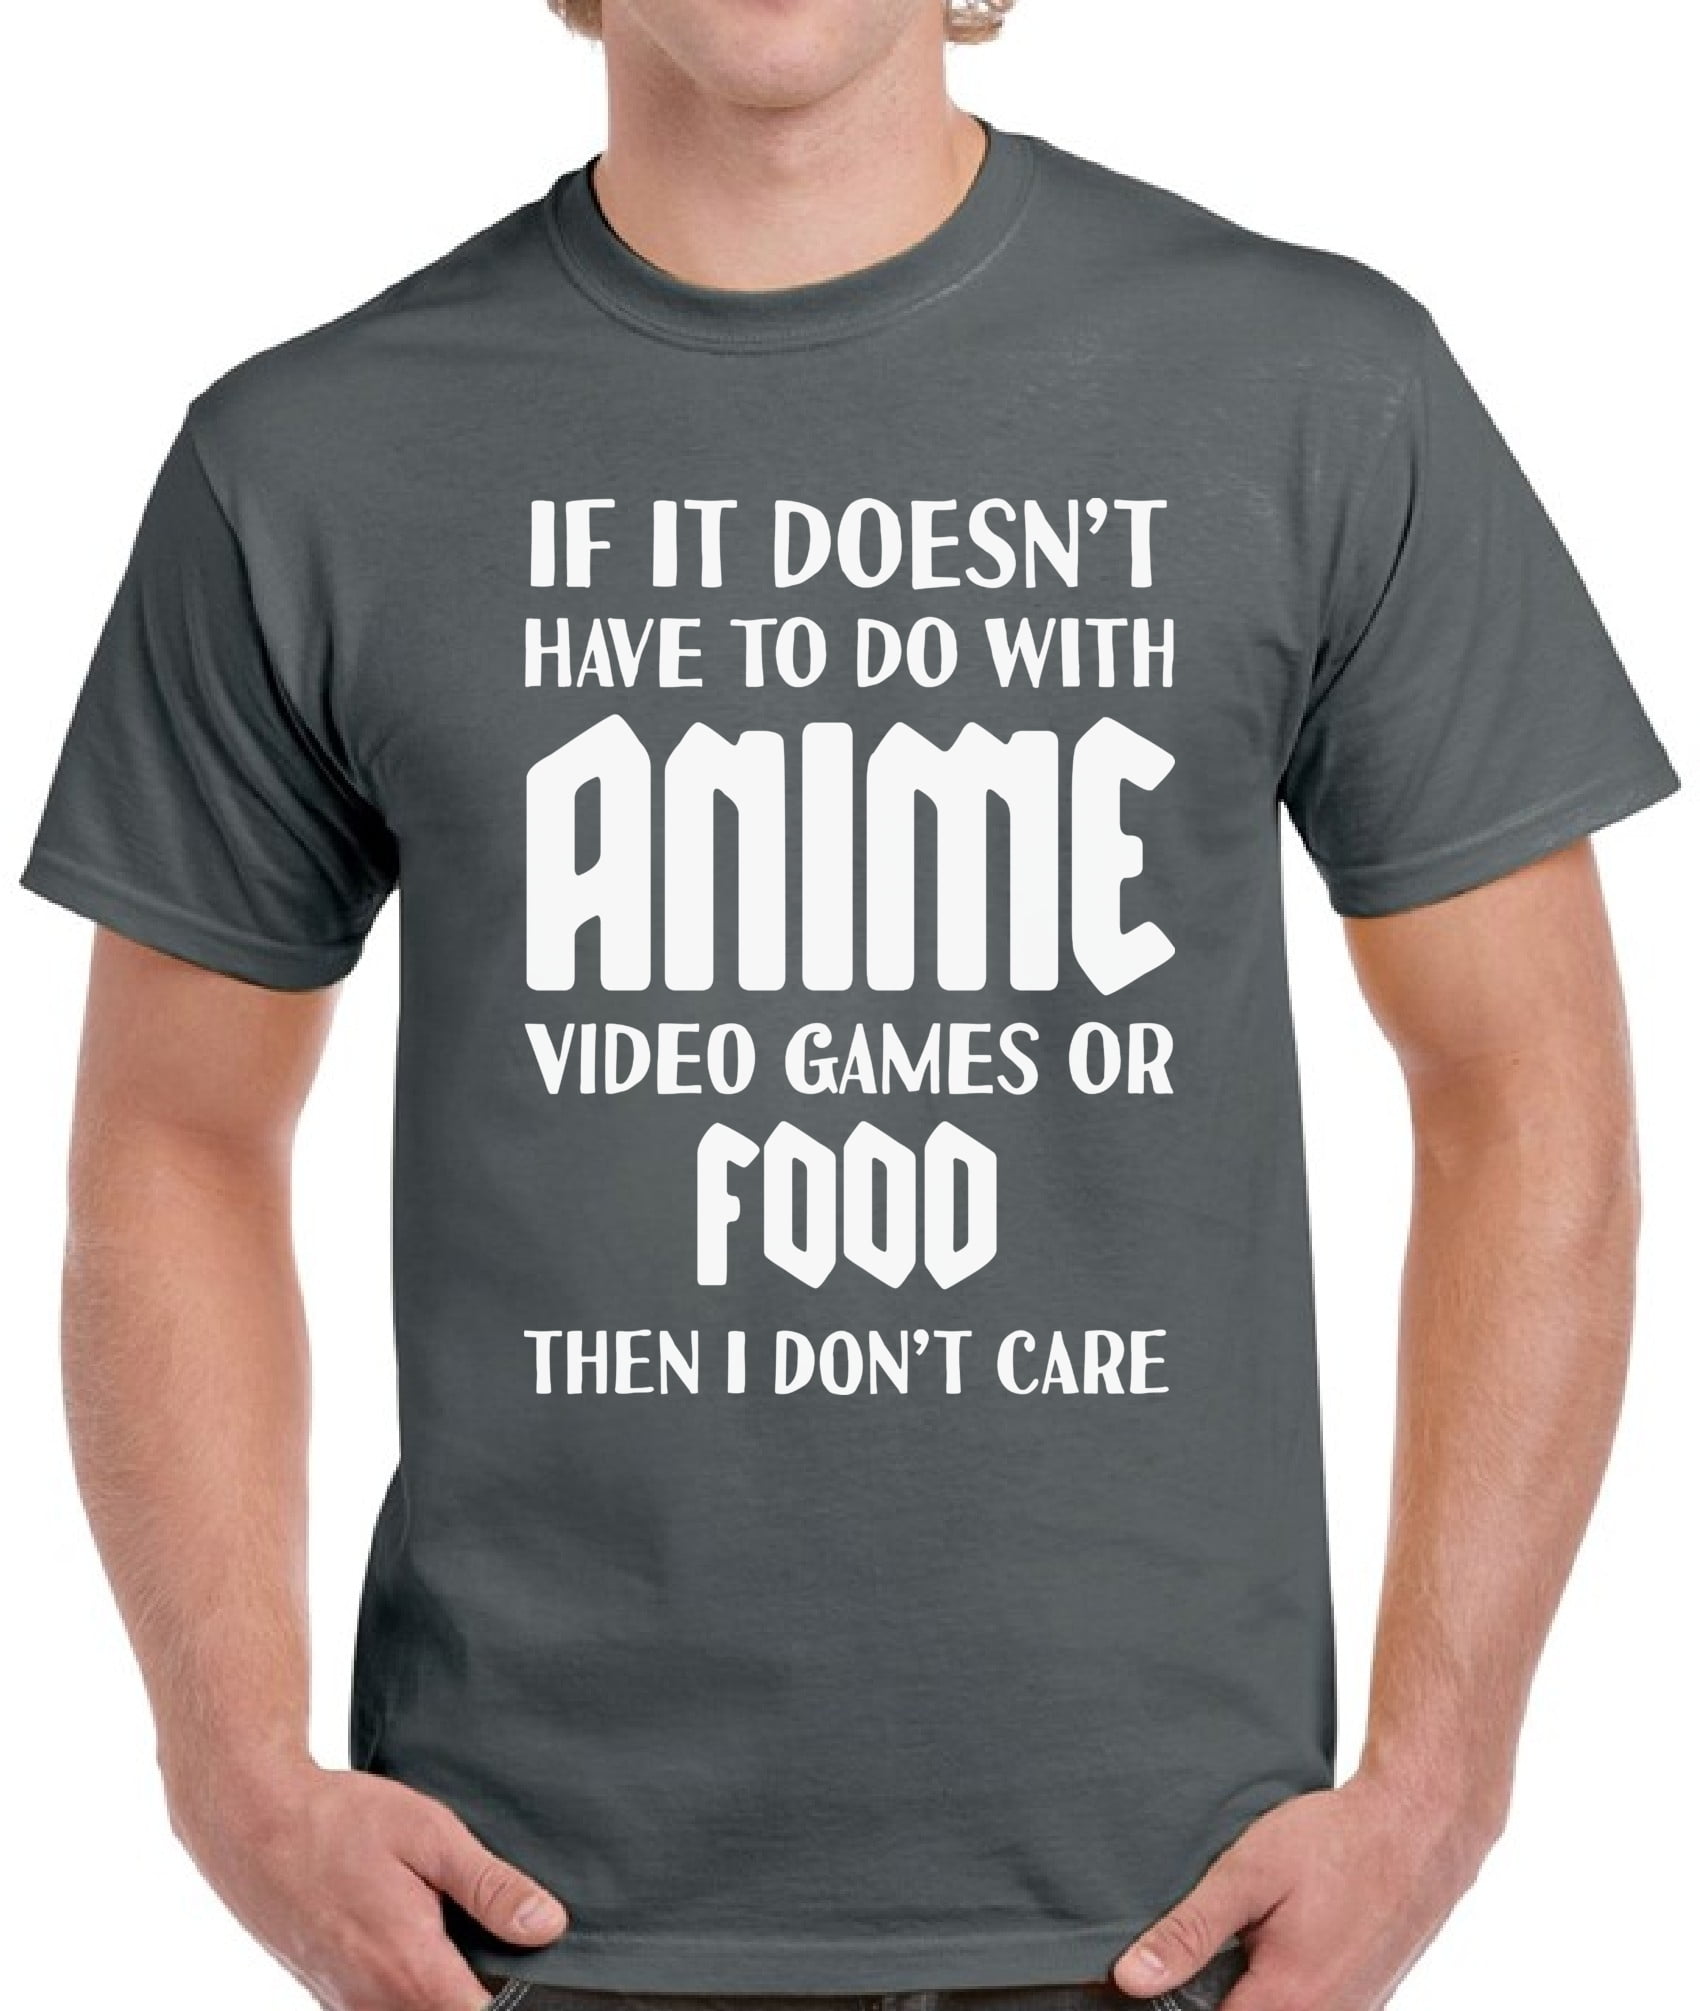 Anime Video Games Anime Food Shirt Mens - S M L XL 2XL 3XL 4XL 5XL Graphic  Tee - Anime Clothes Funny Gift 